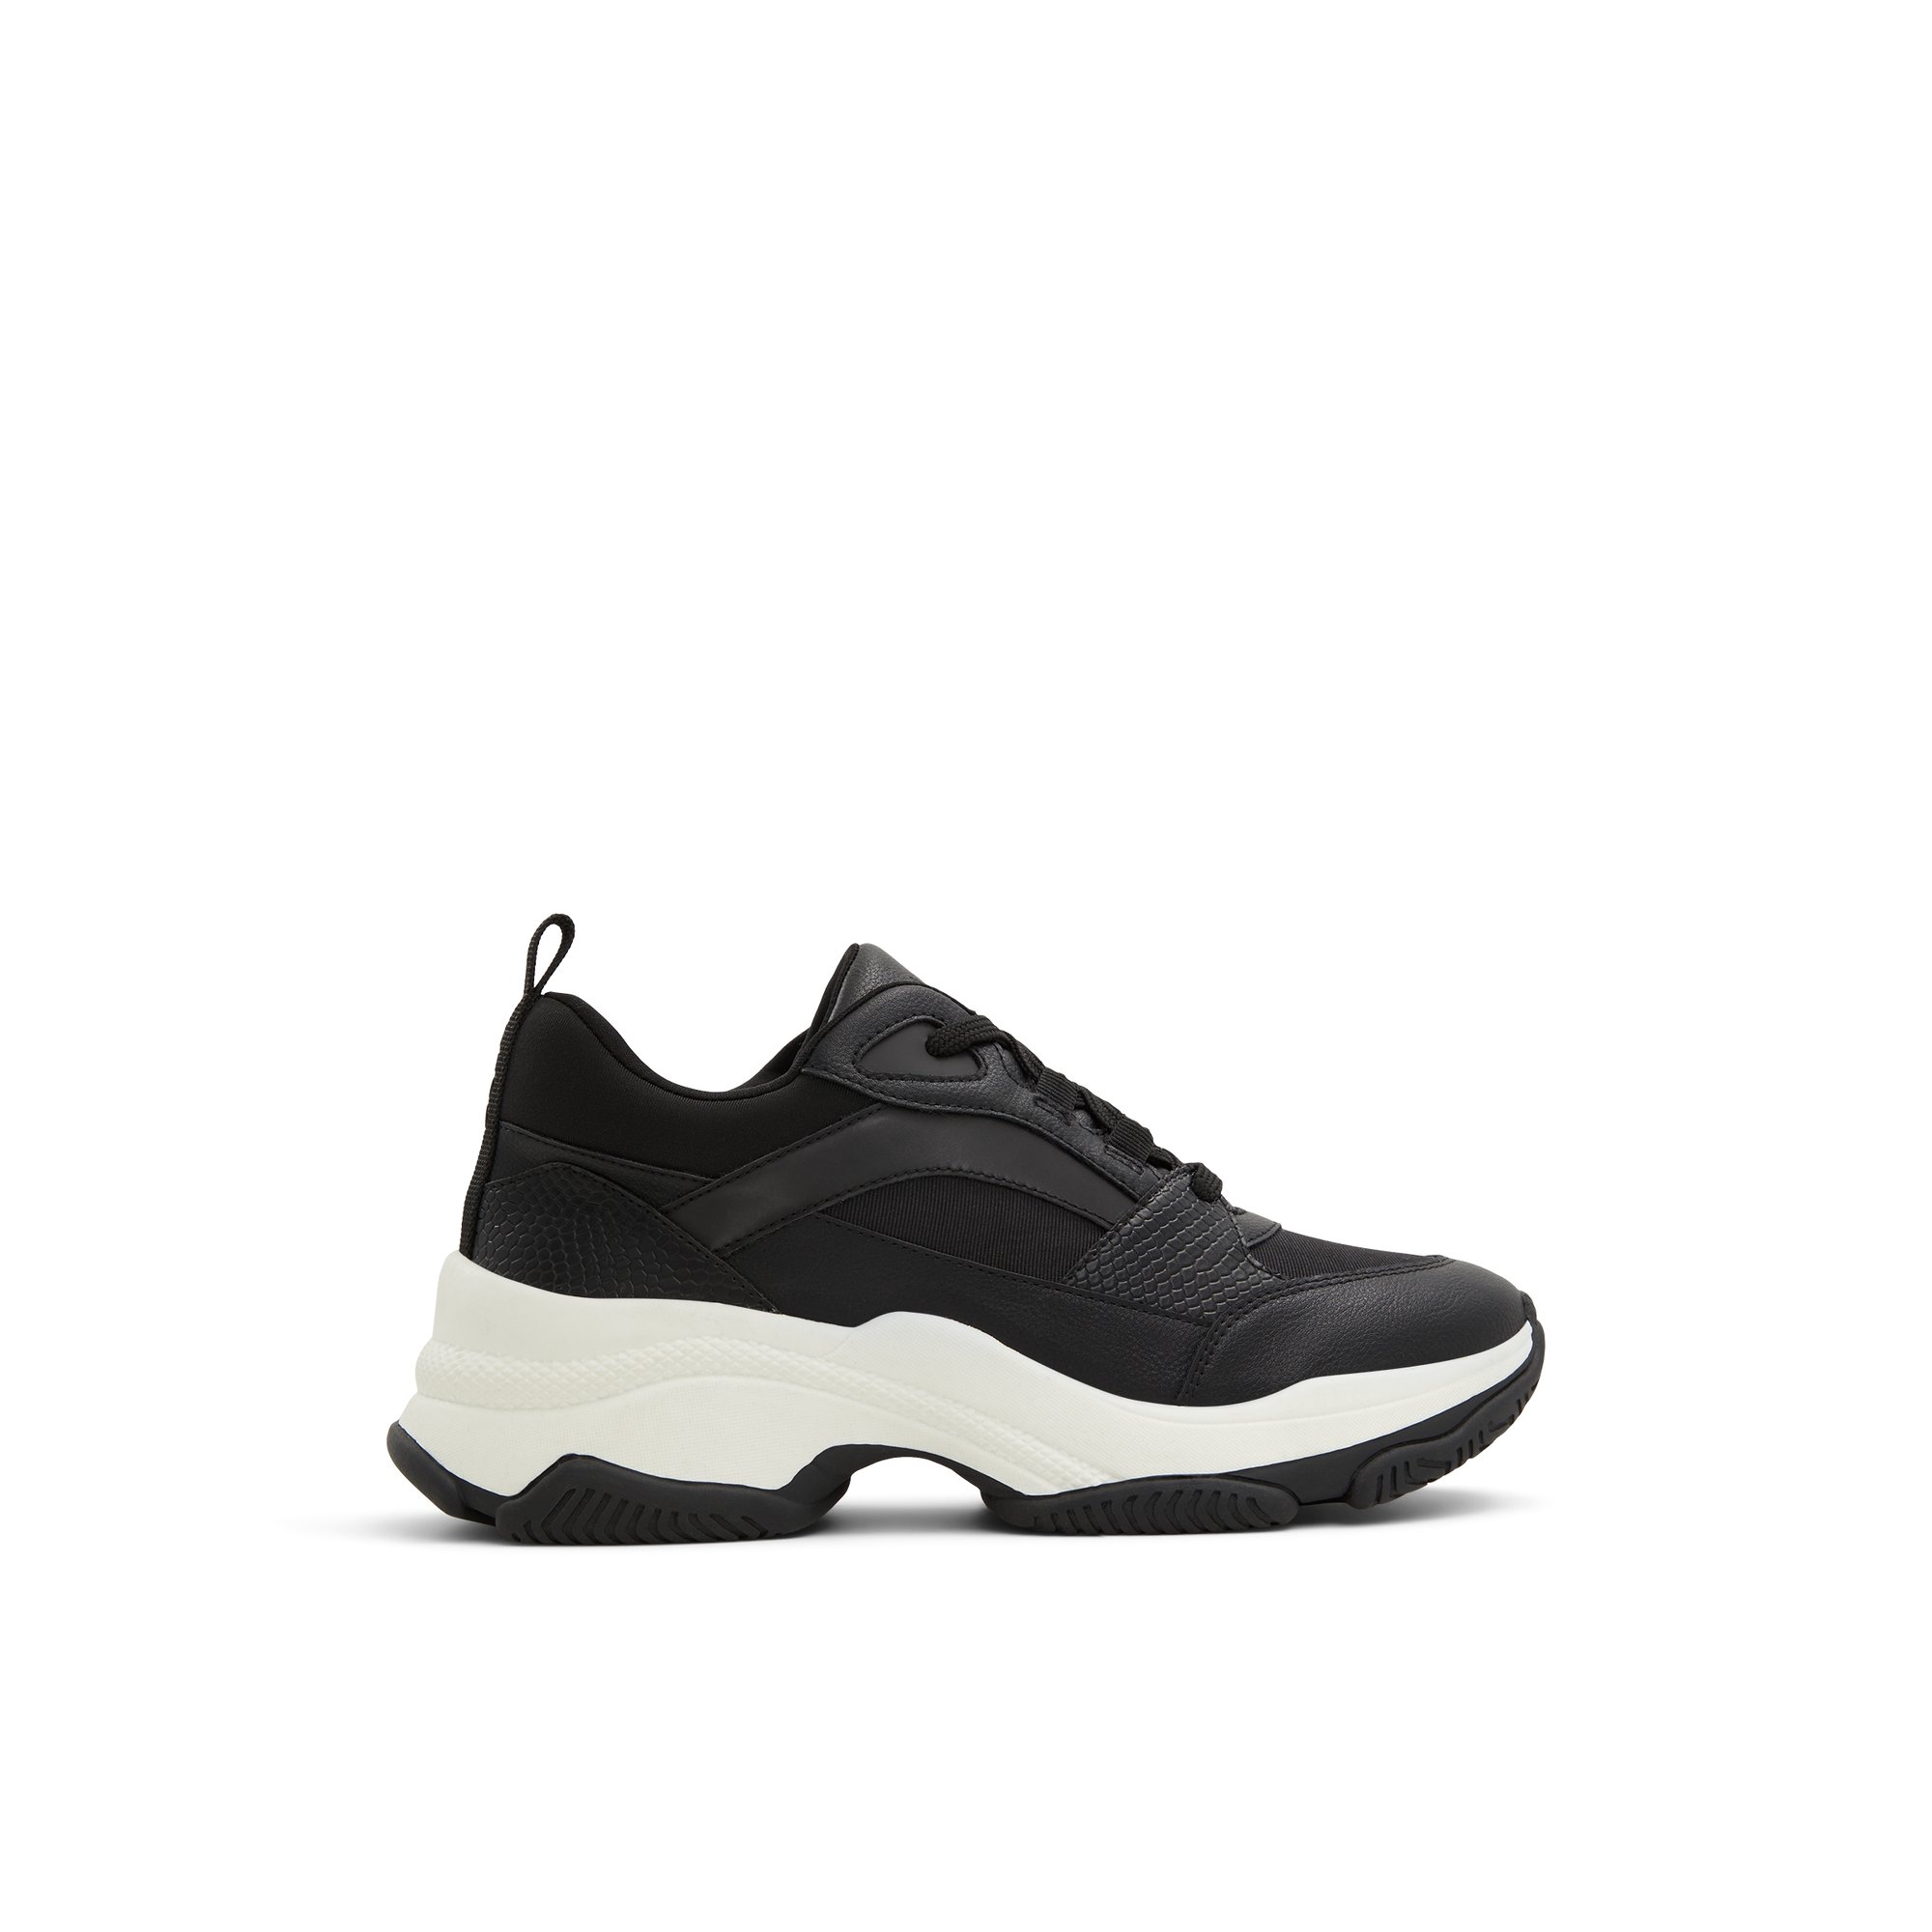 ALDO Valleyia - Women's Platform and Wedge Sneaker Sneakers - Black